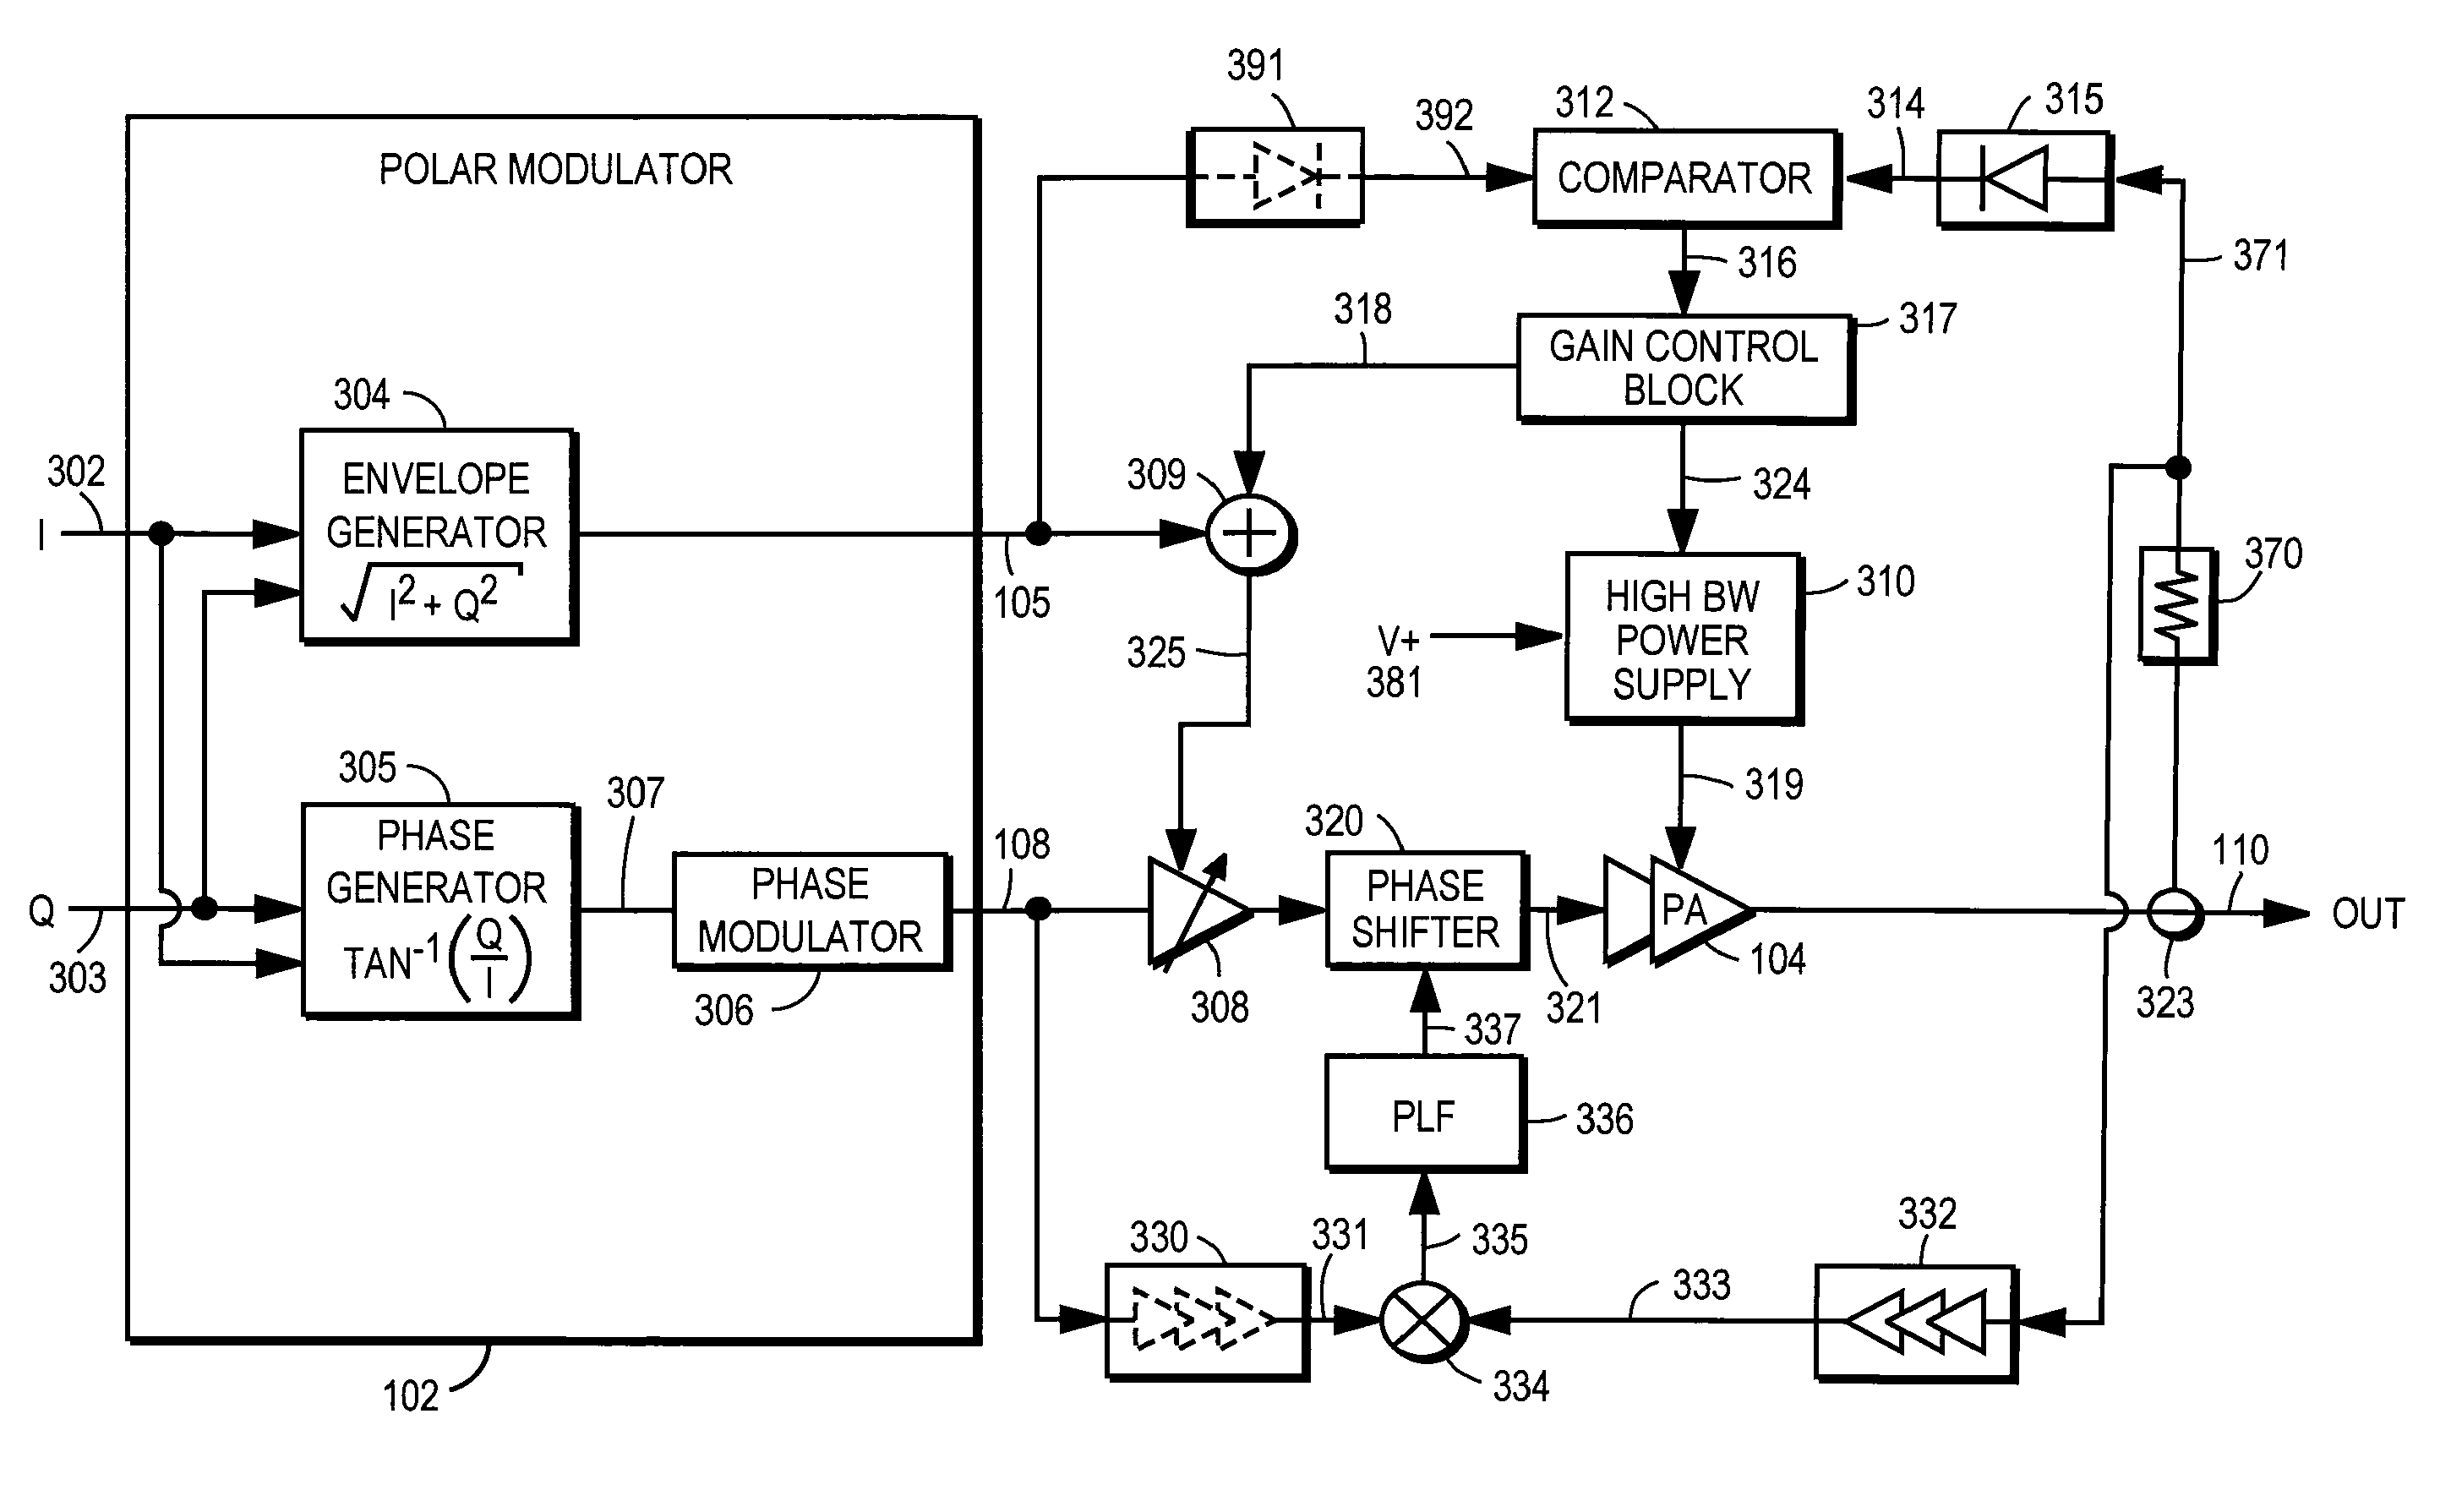 Power amplifier controller with polar transmitter